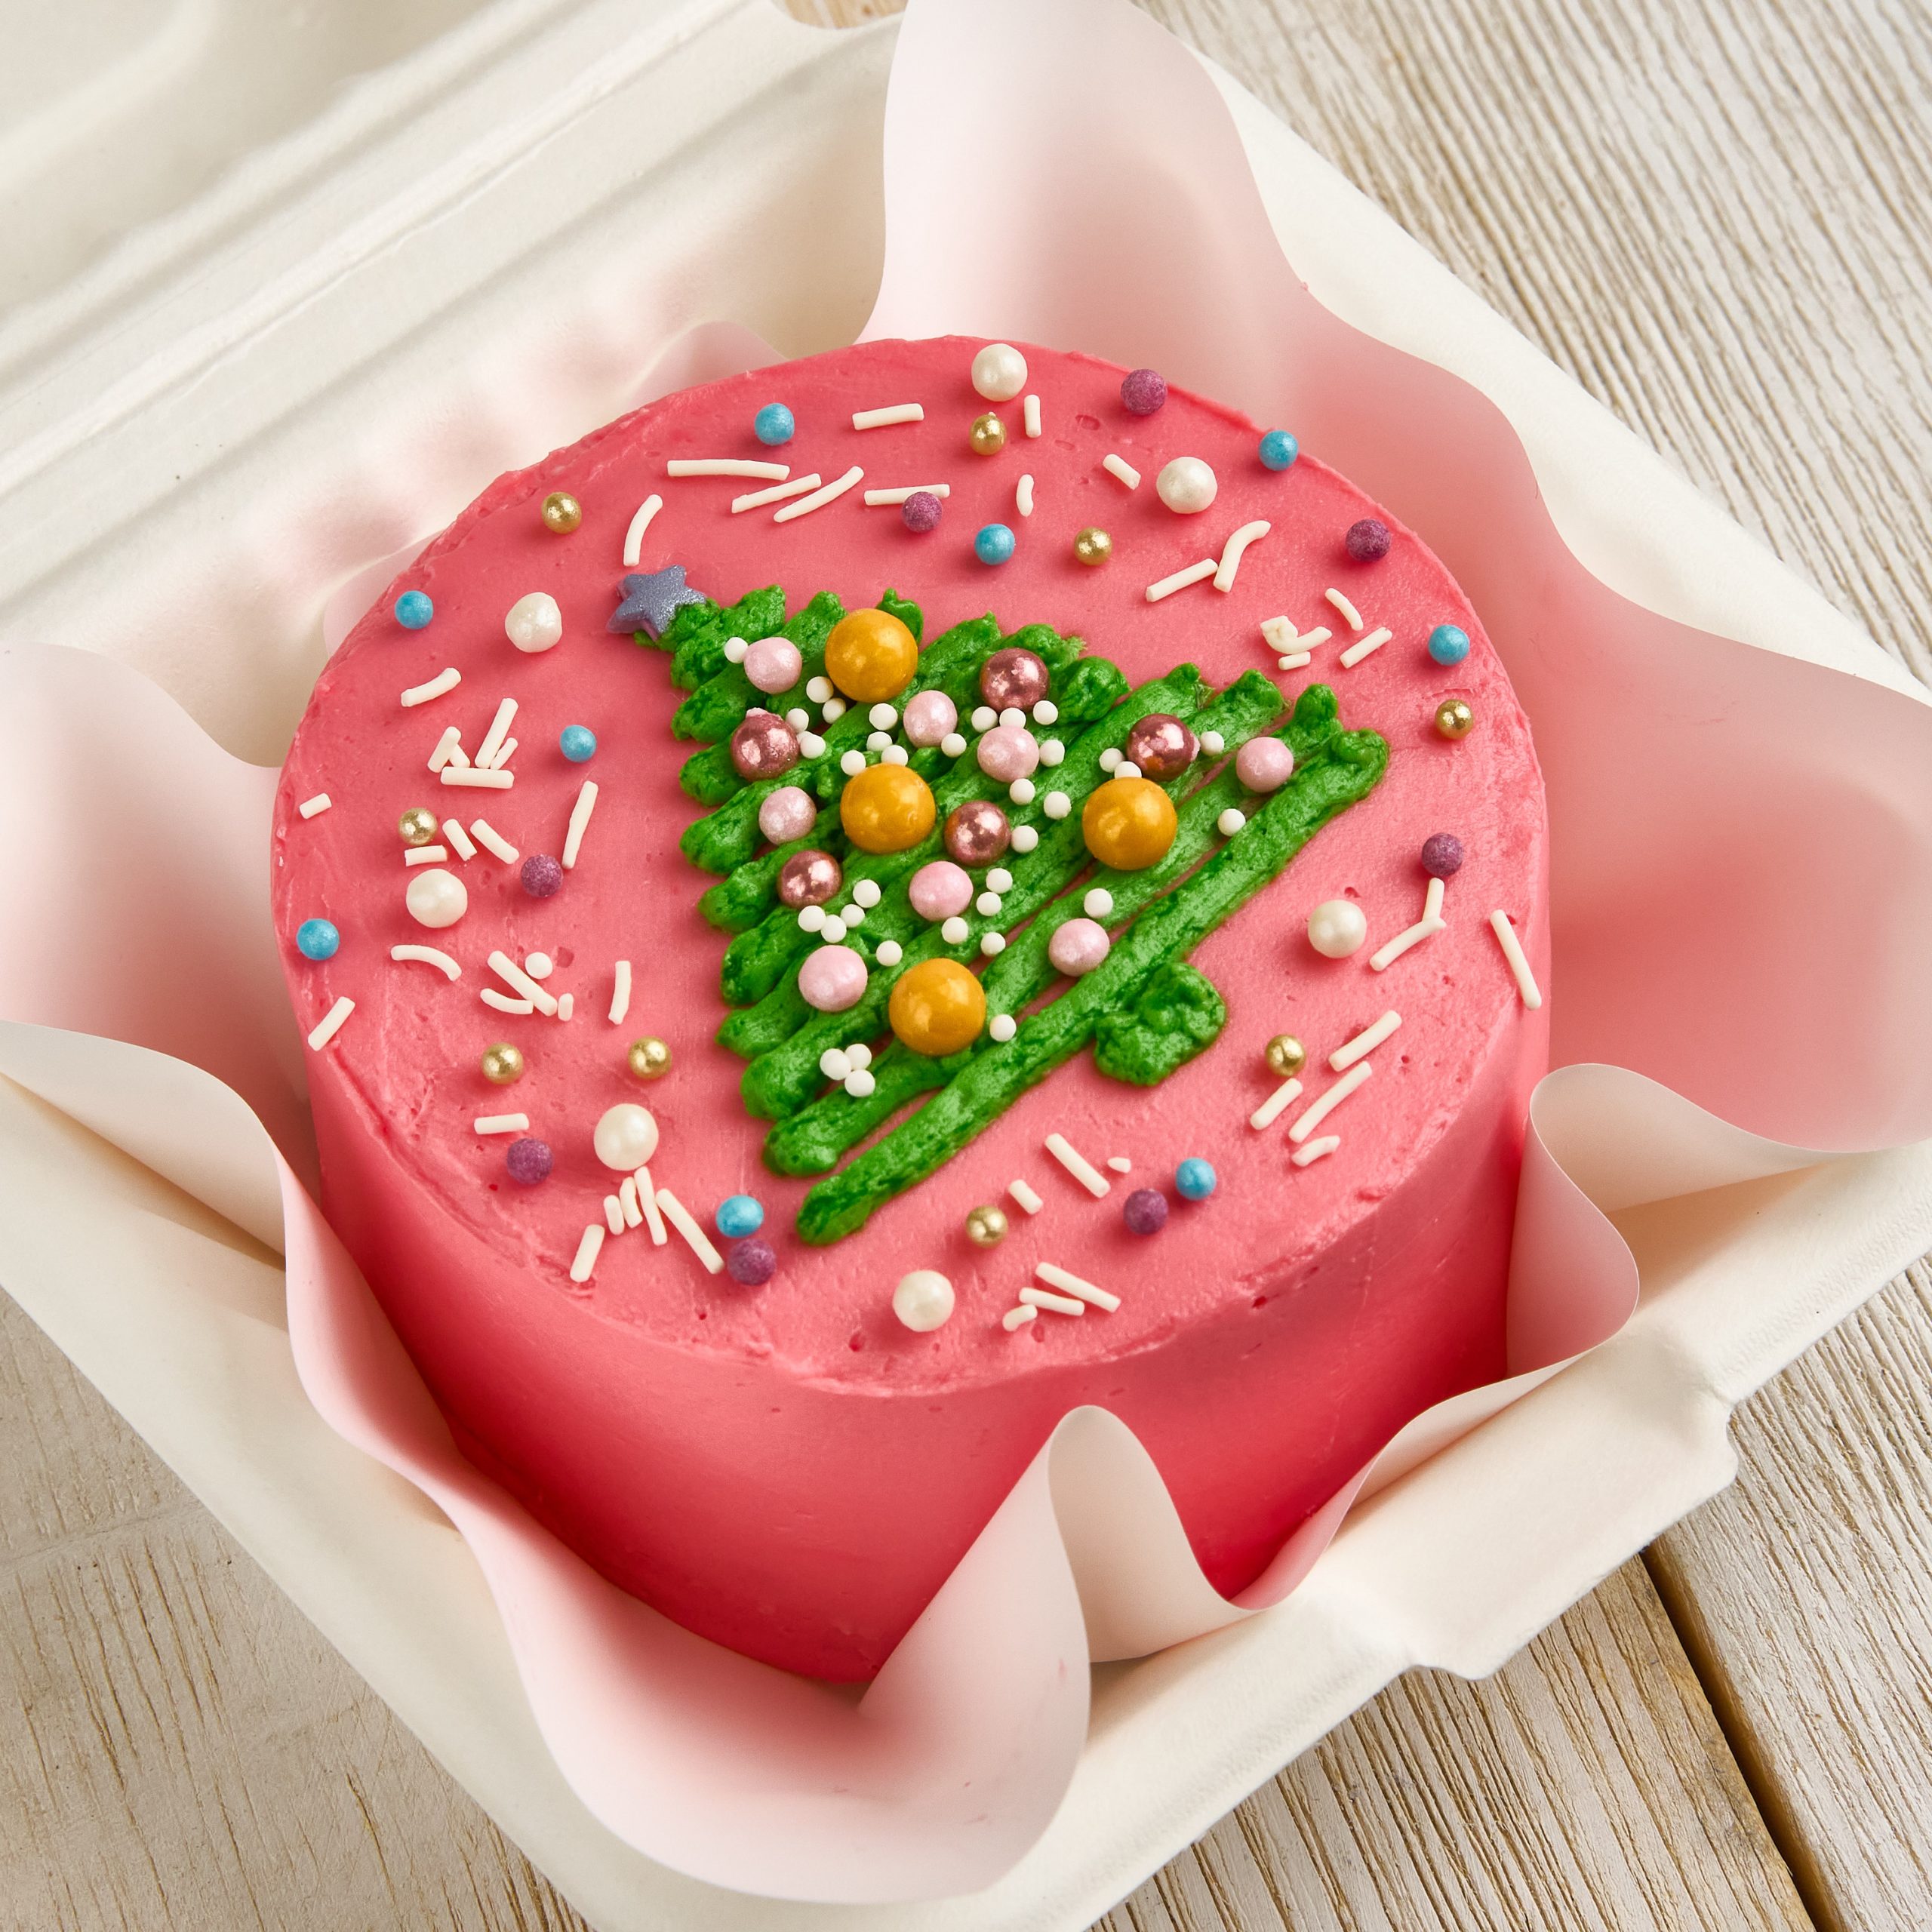 Бенто тортики идеи. Бенто торт. Рождественские Бенто тортики. Красивые Бенто тортики на день рождения. Украшение Бенто тортика клубникой.